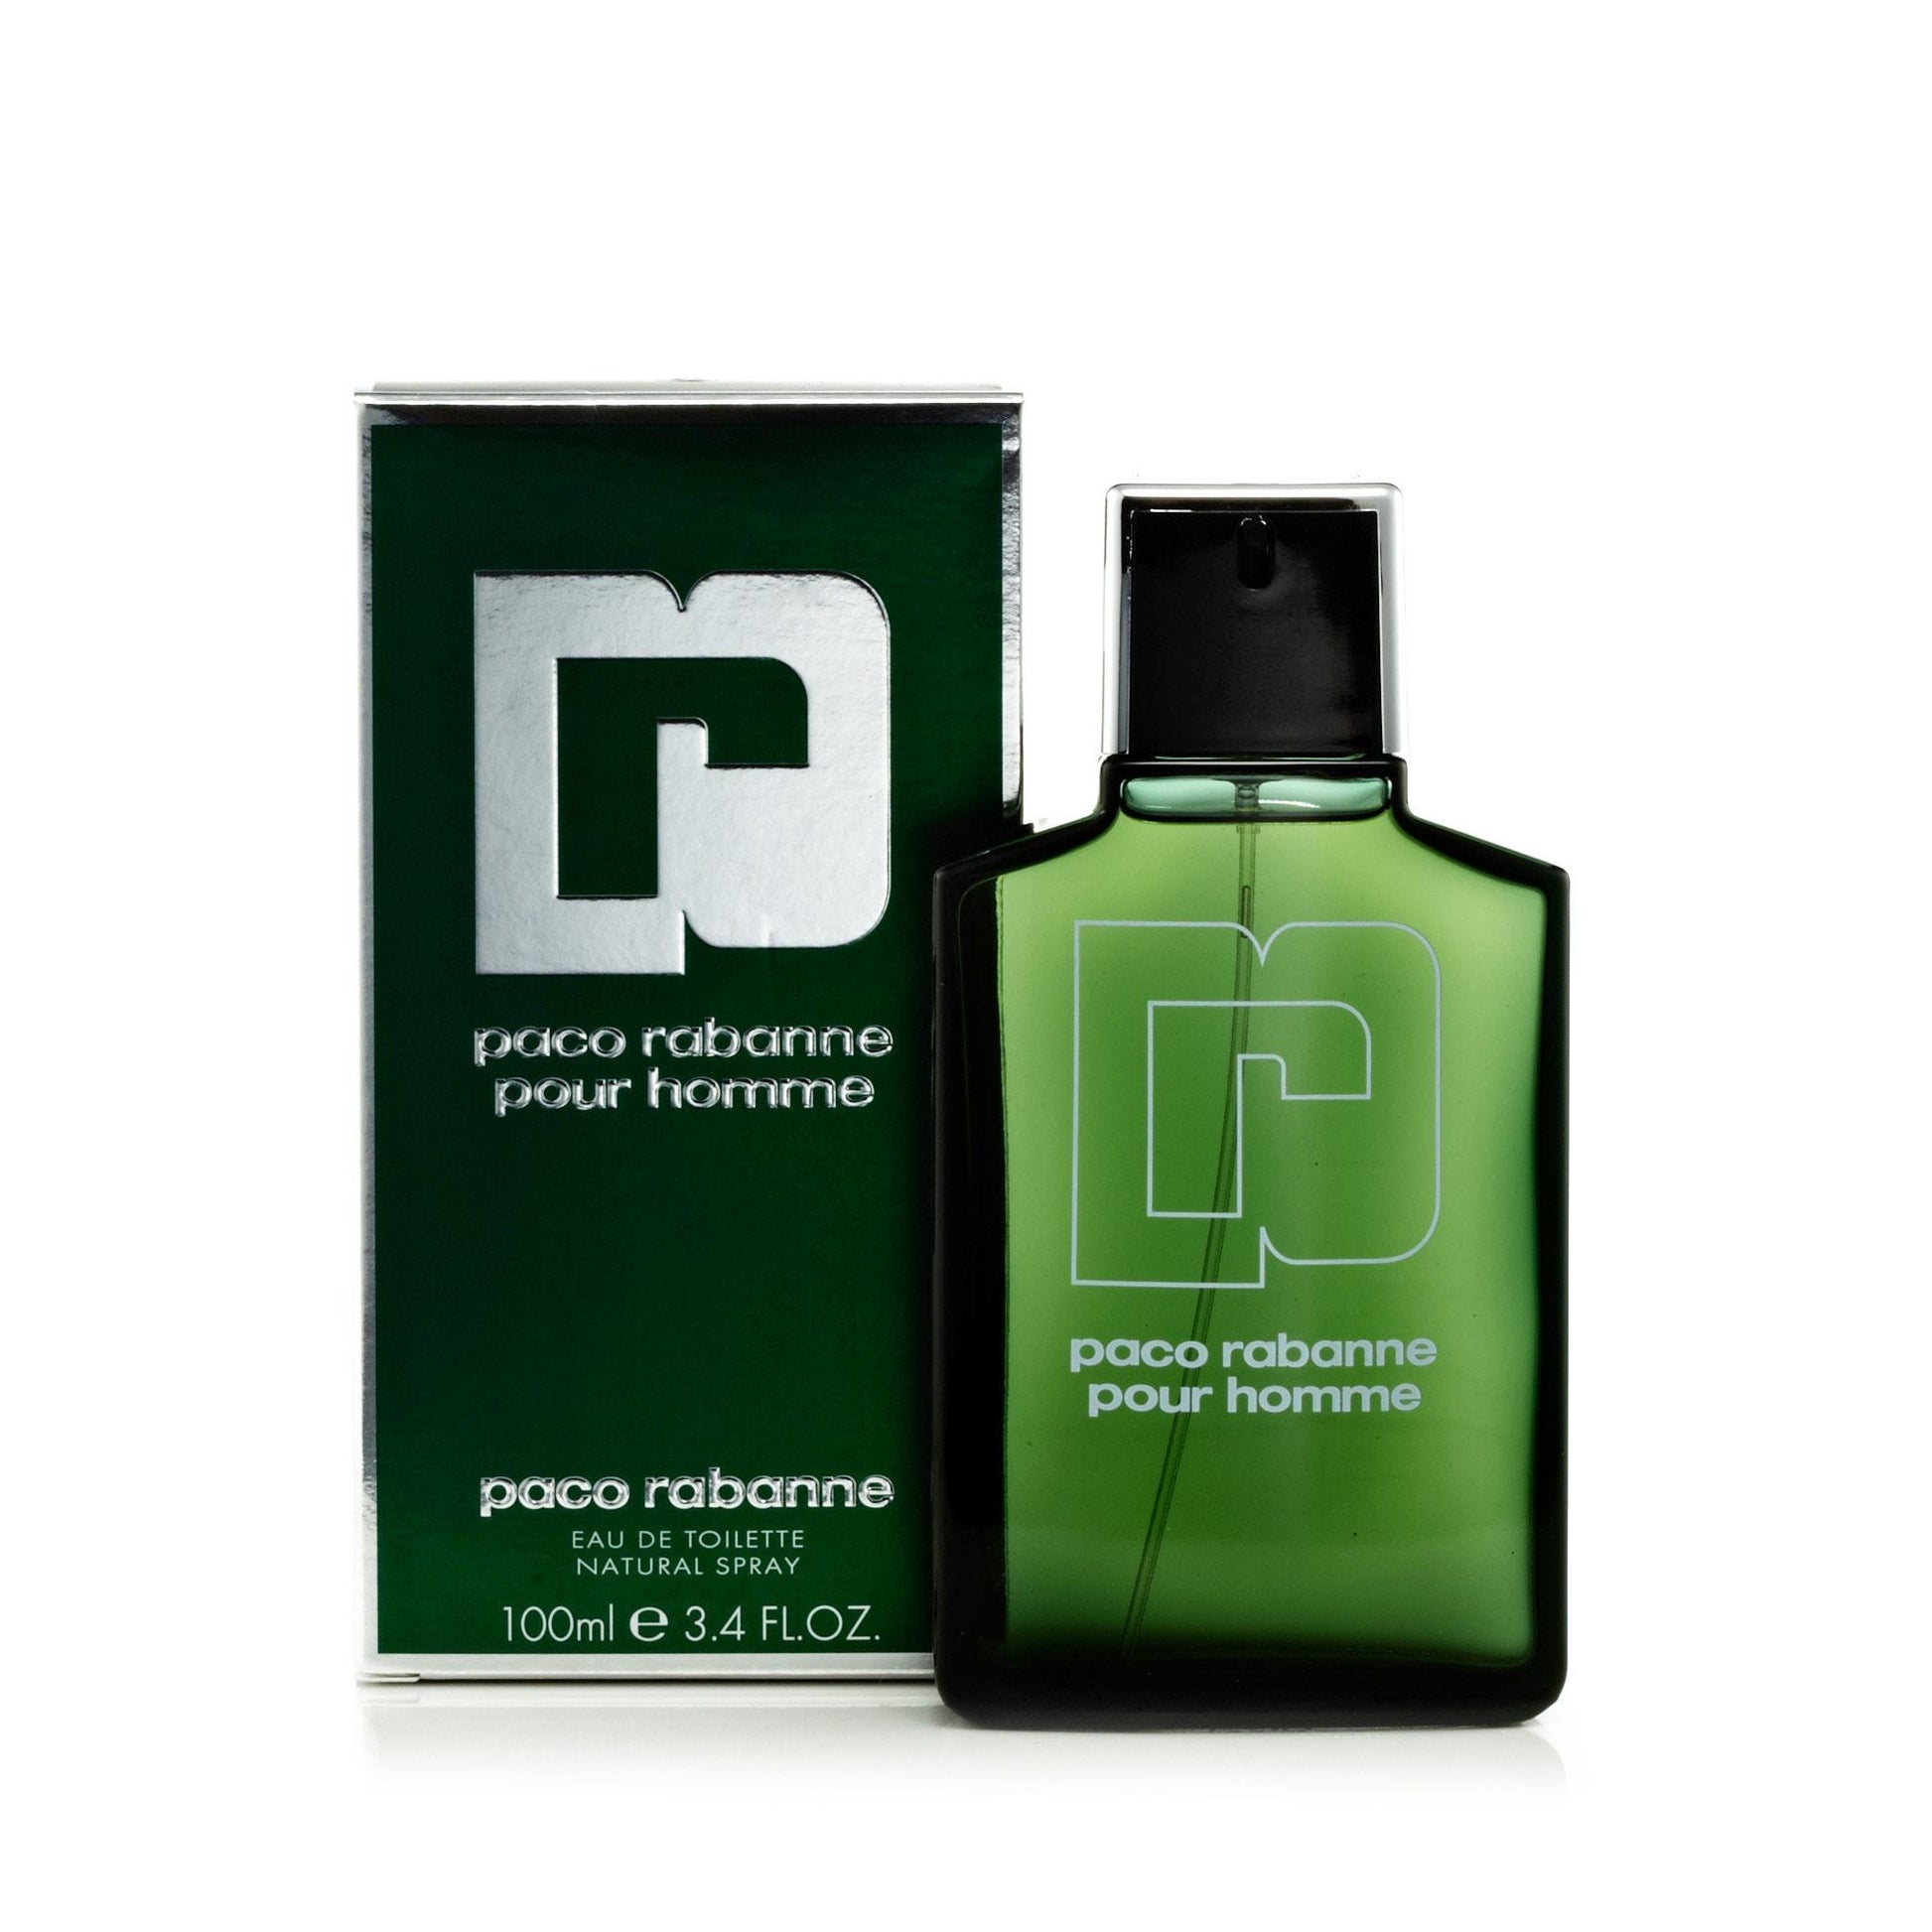 Paco Rabanne Eau de Toilette Spray for Men by Paco Rabanne, Product image 5